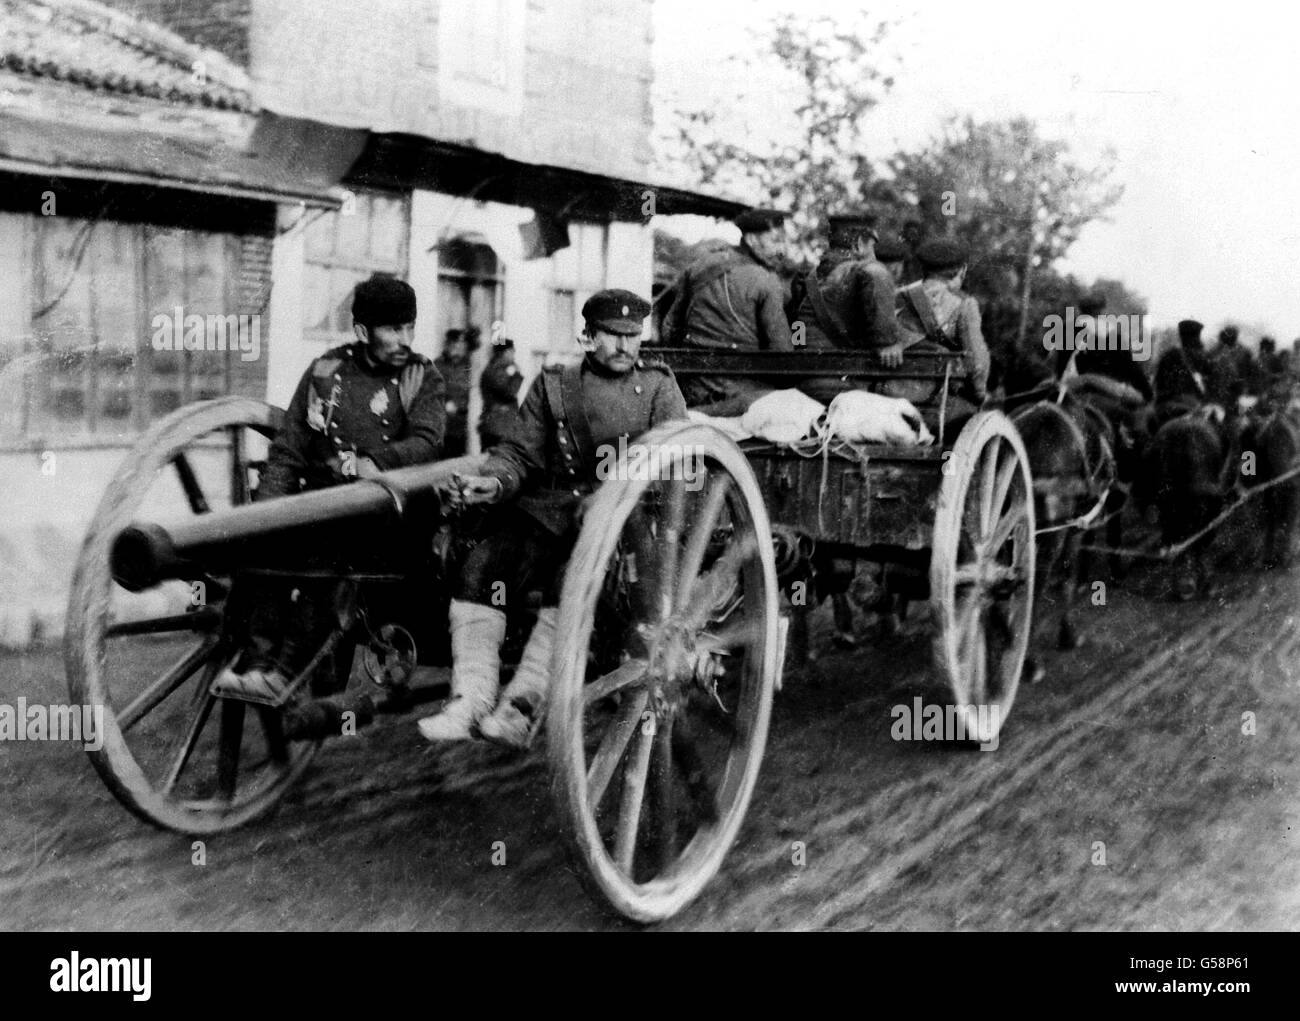 THE BALKAN WAR: A Bulgarian Artillery team on the march during the Balkan War of 1912-1913. Stock Photo